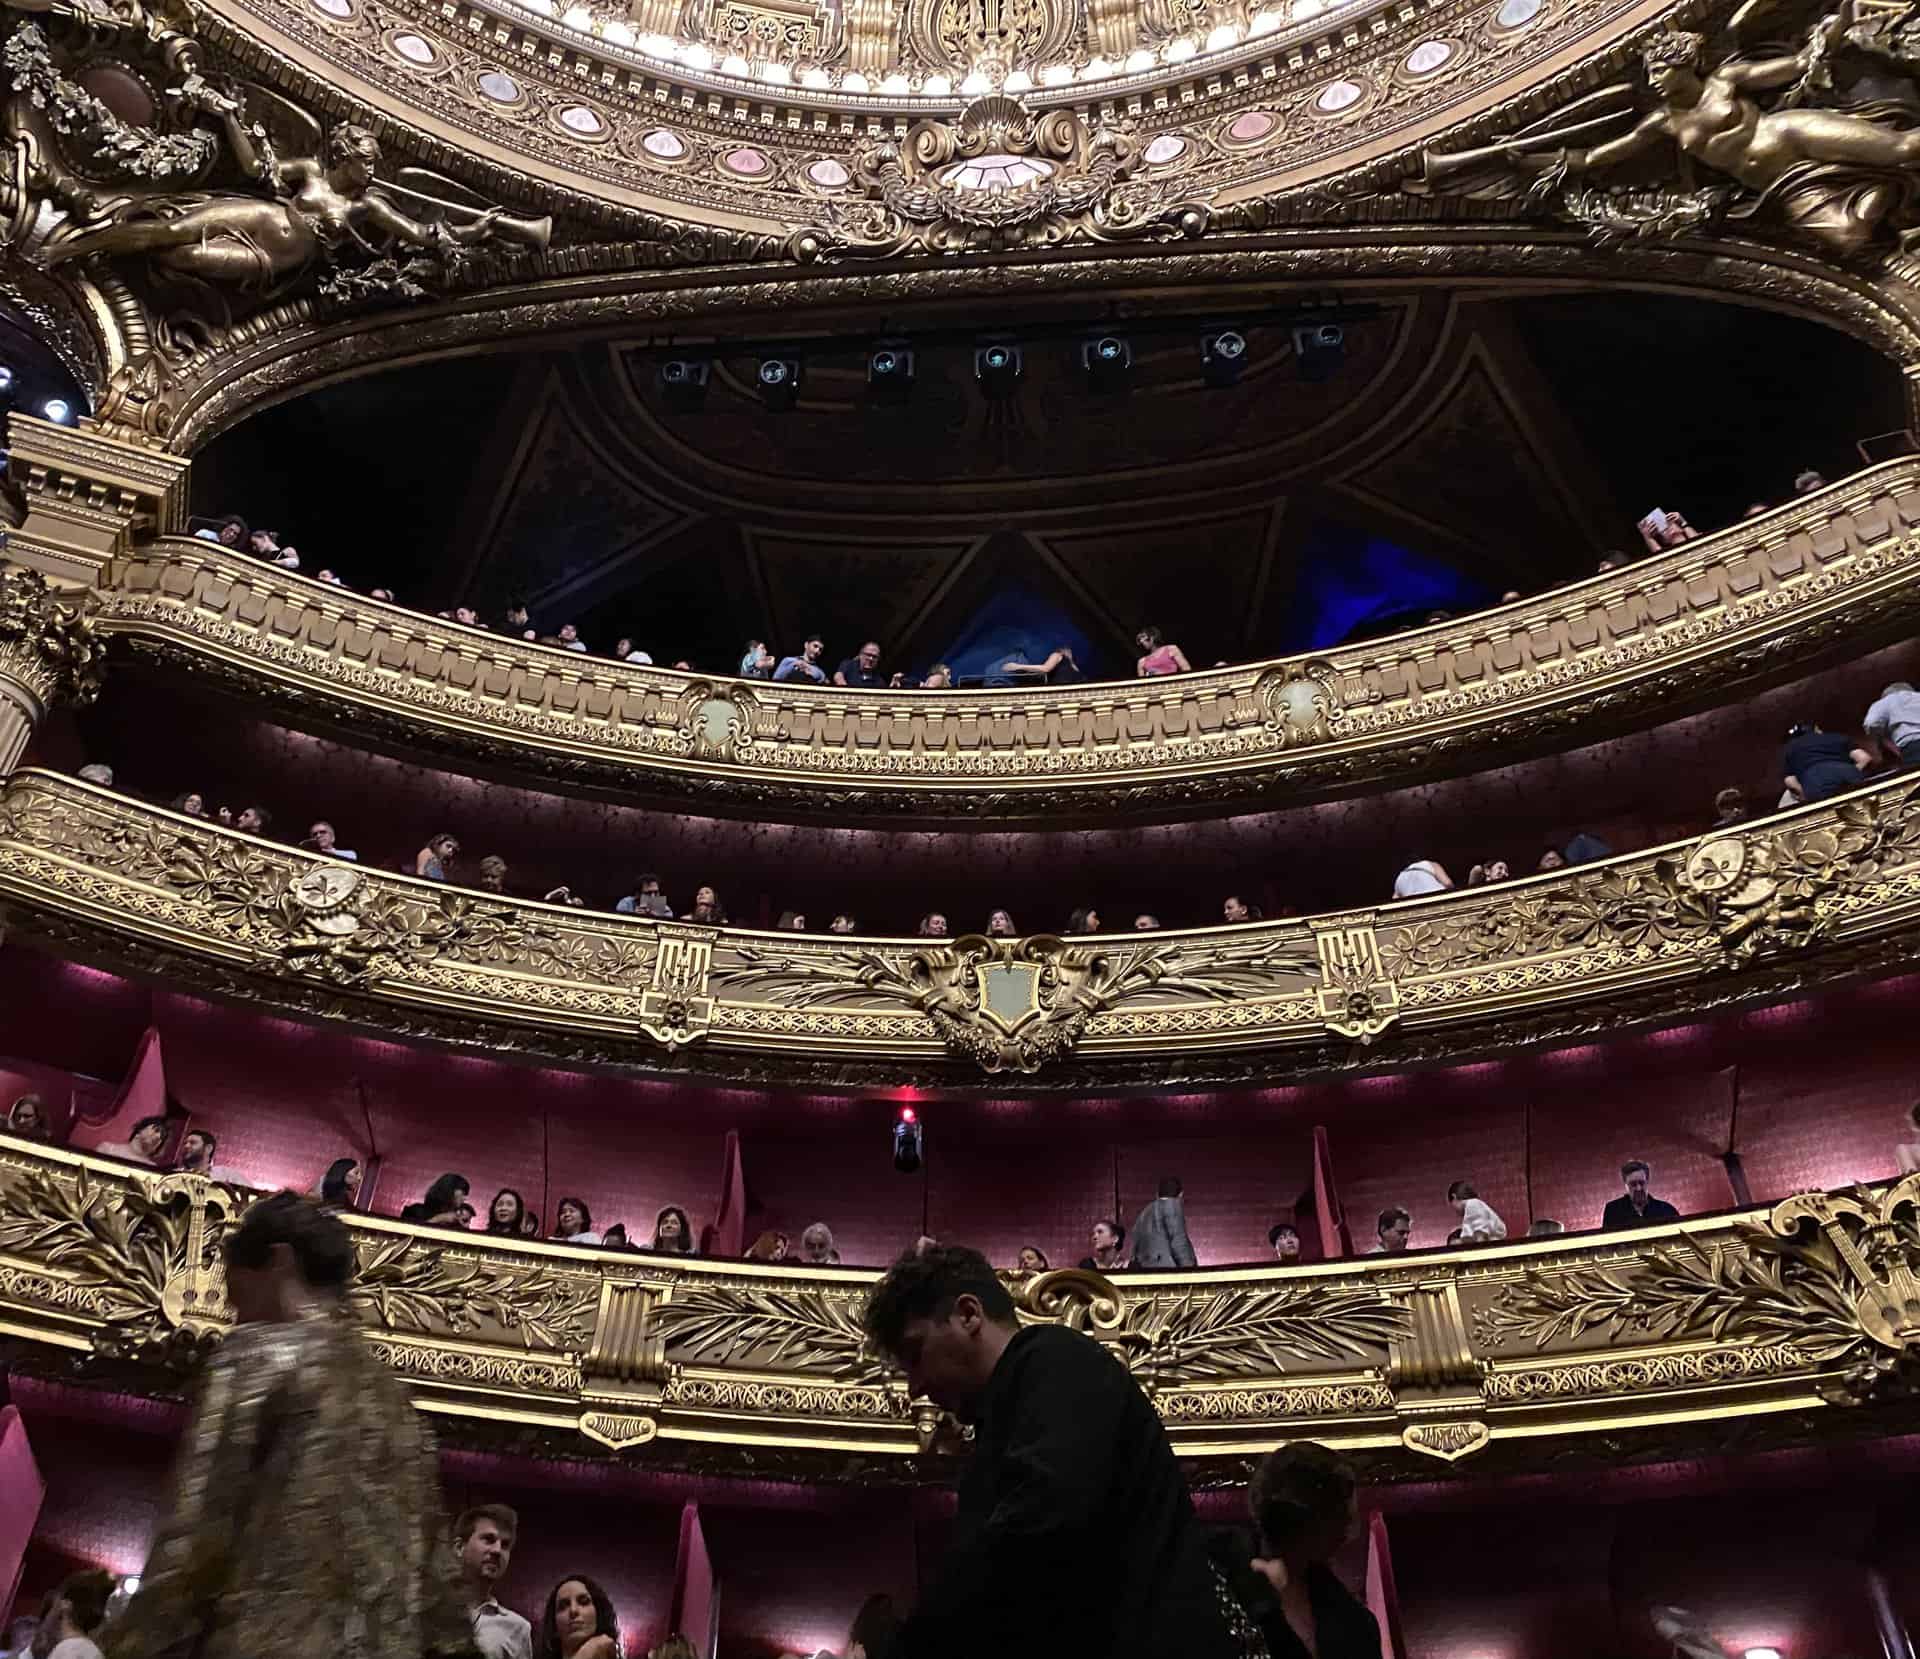 inside the auditorium in Palais Garnier in Paris, France